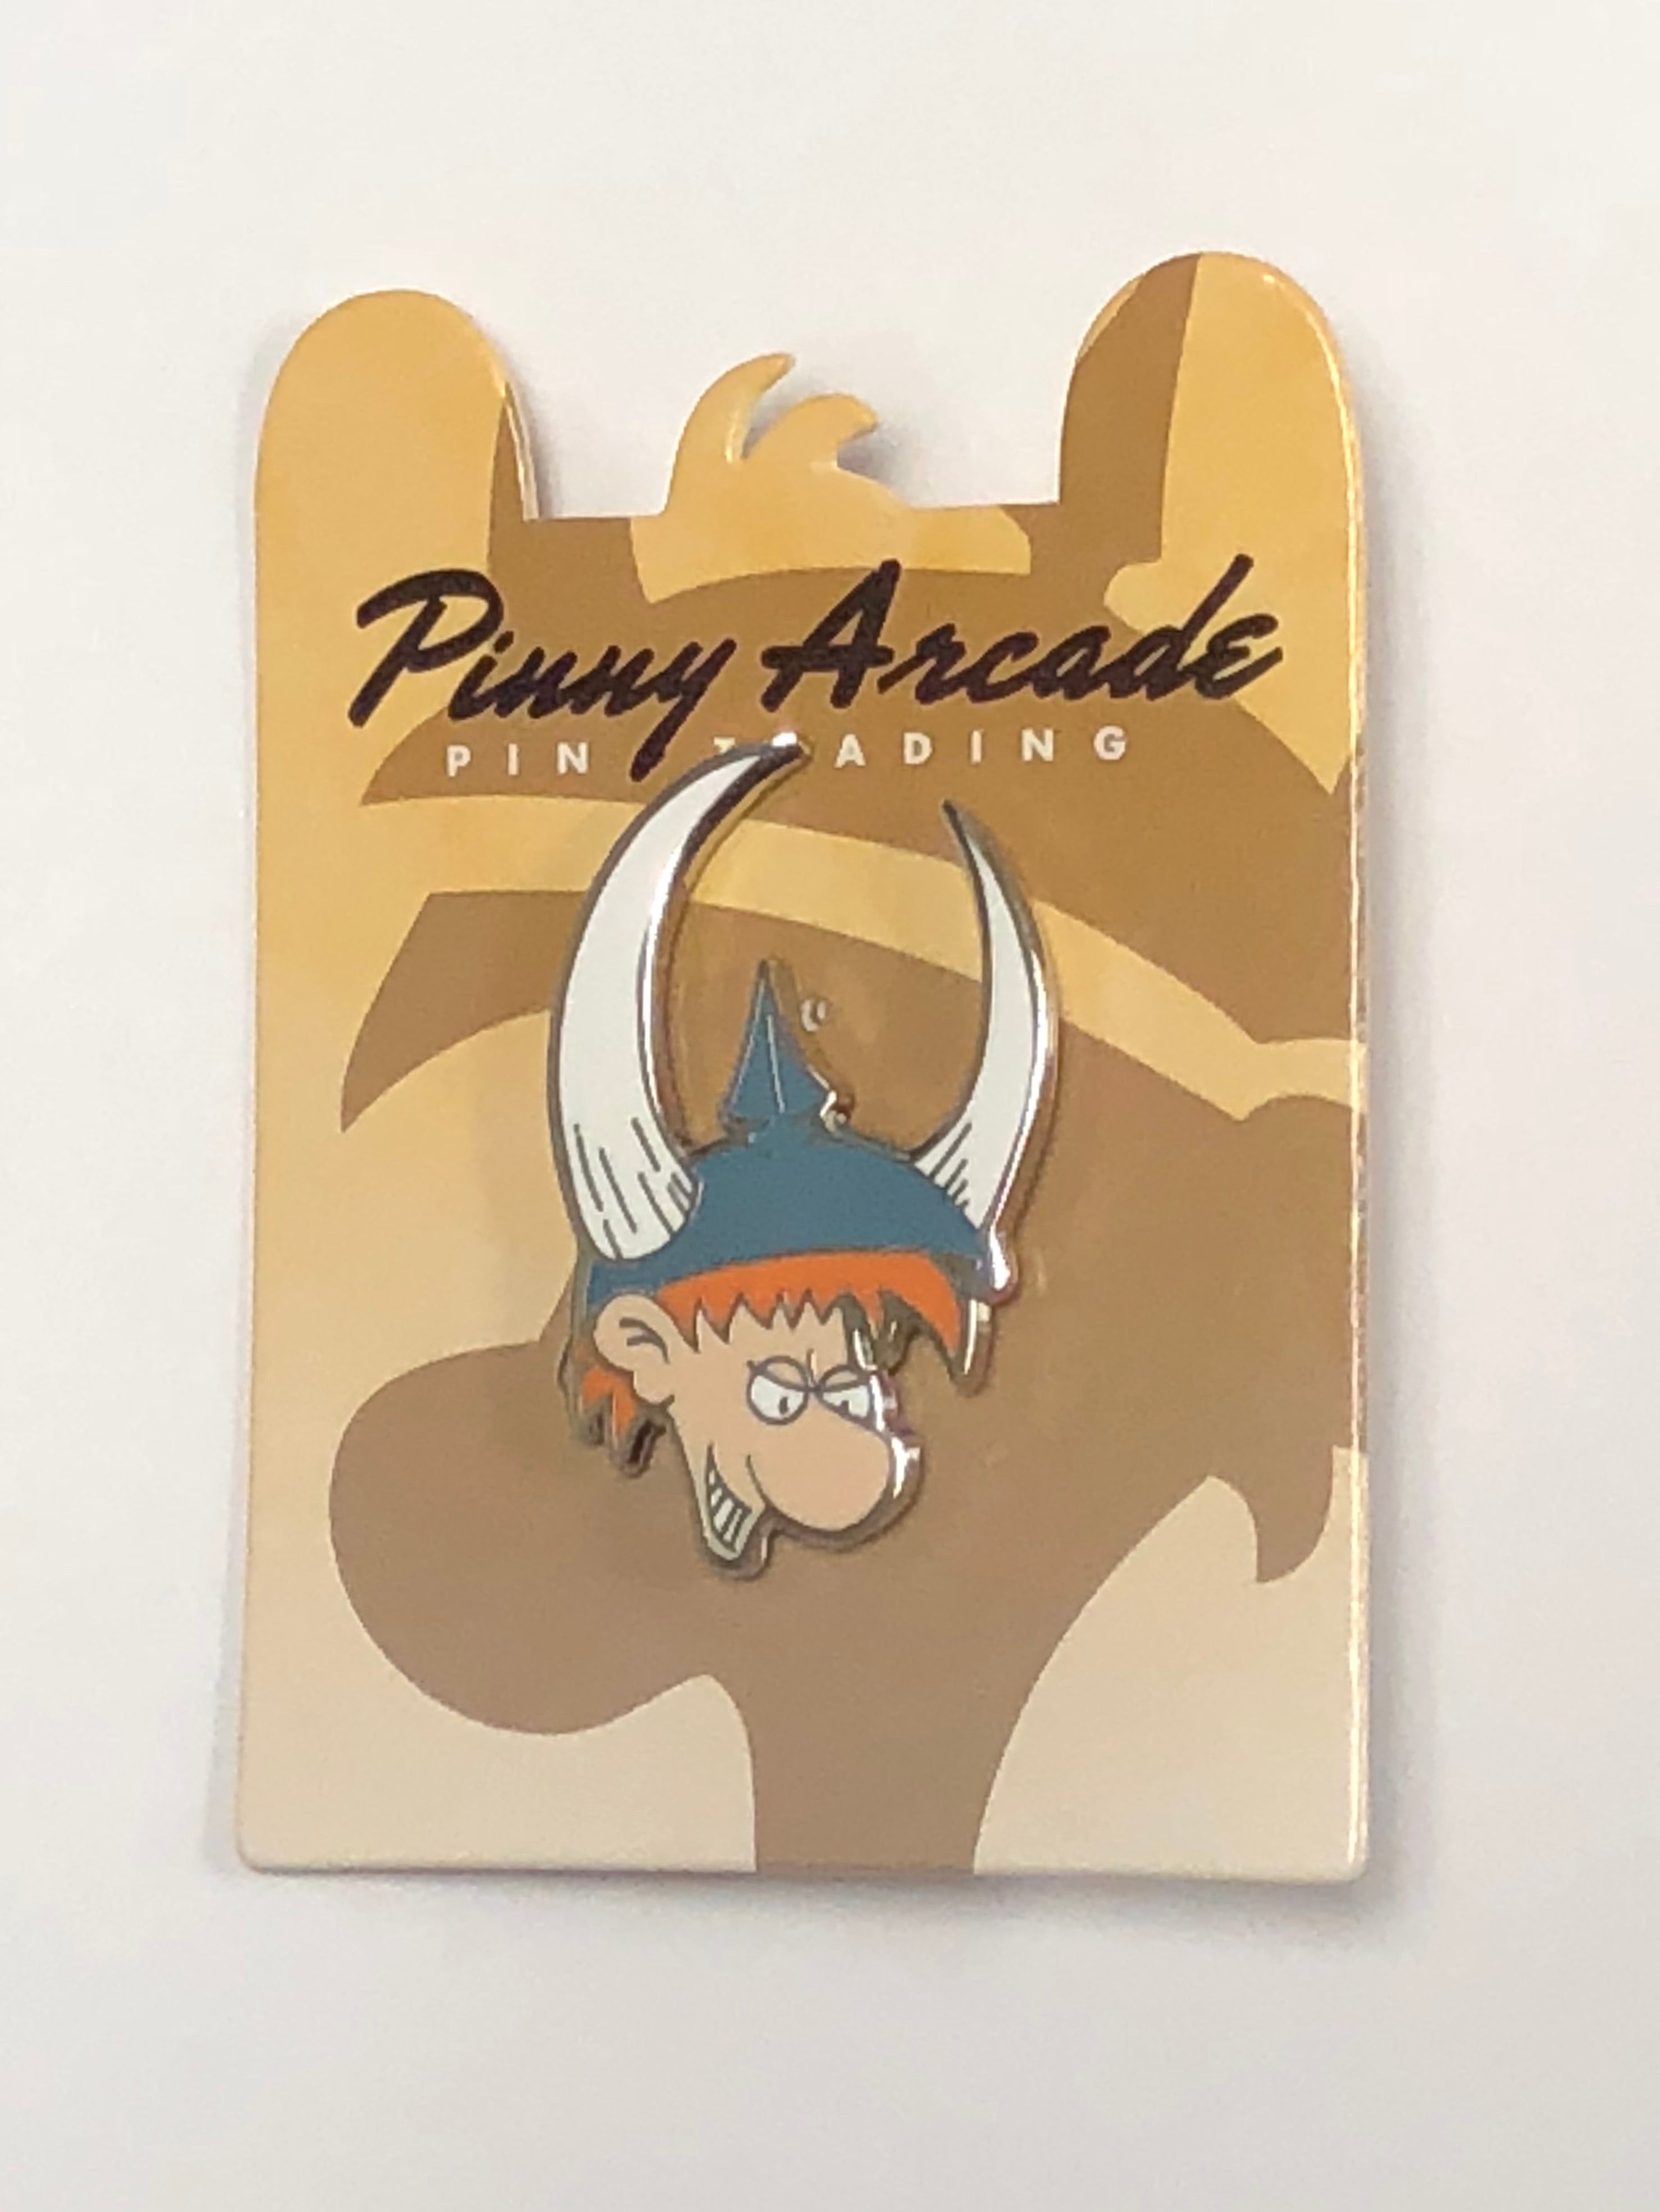 Munchkin Head Pinny Arcade Pin